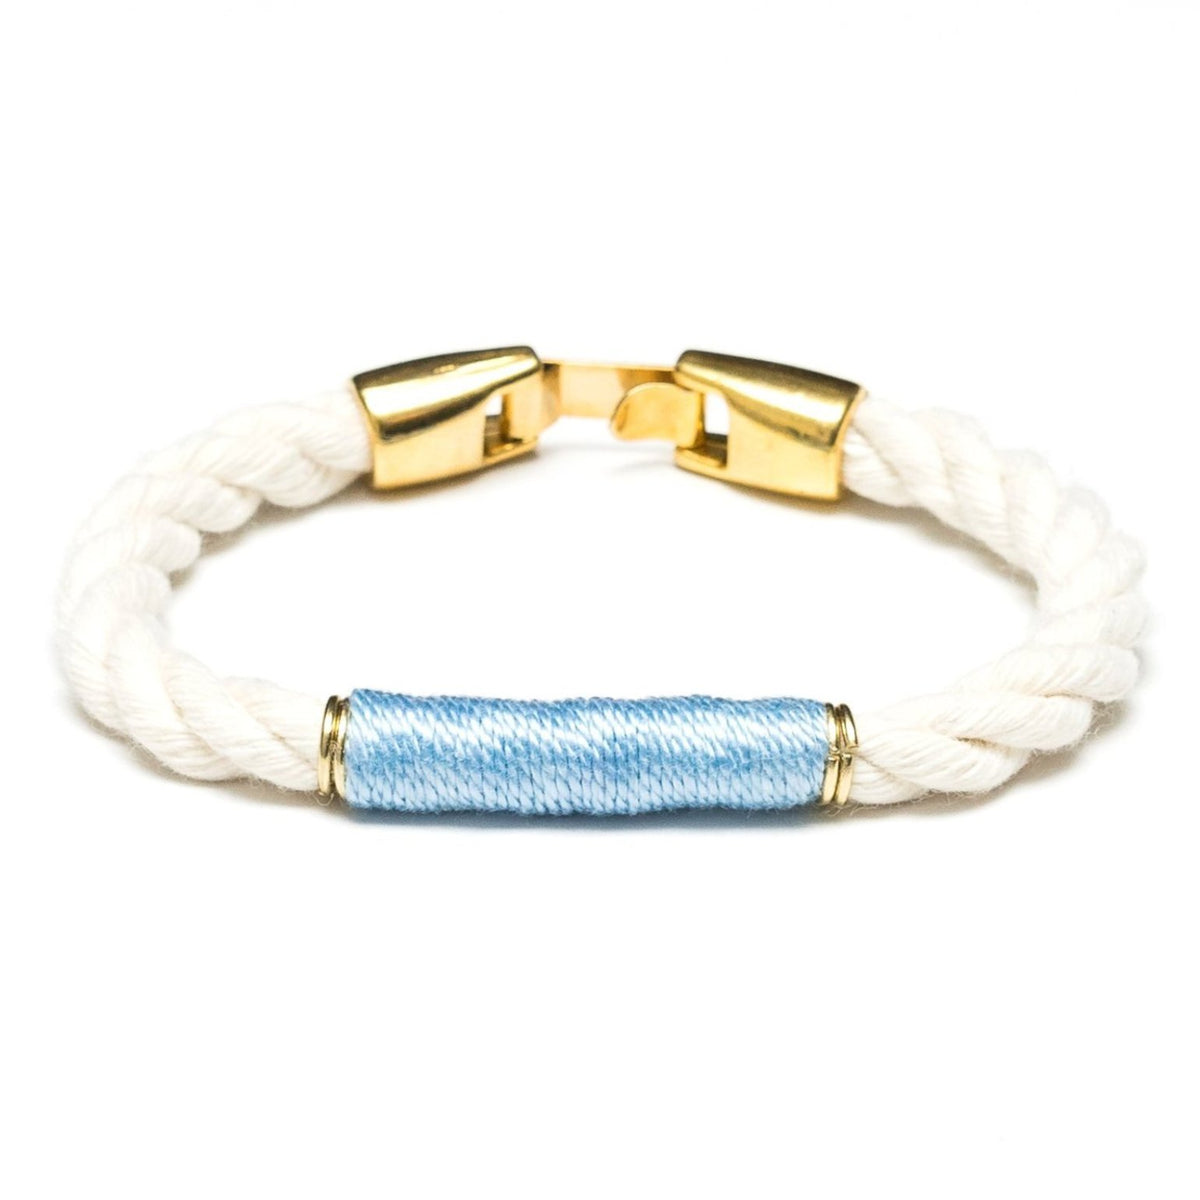 Allison Cole Jewelry - Beacon Bracelet - Ivory/ Light Blue/ Gold